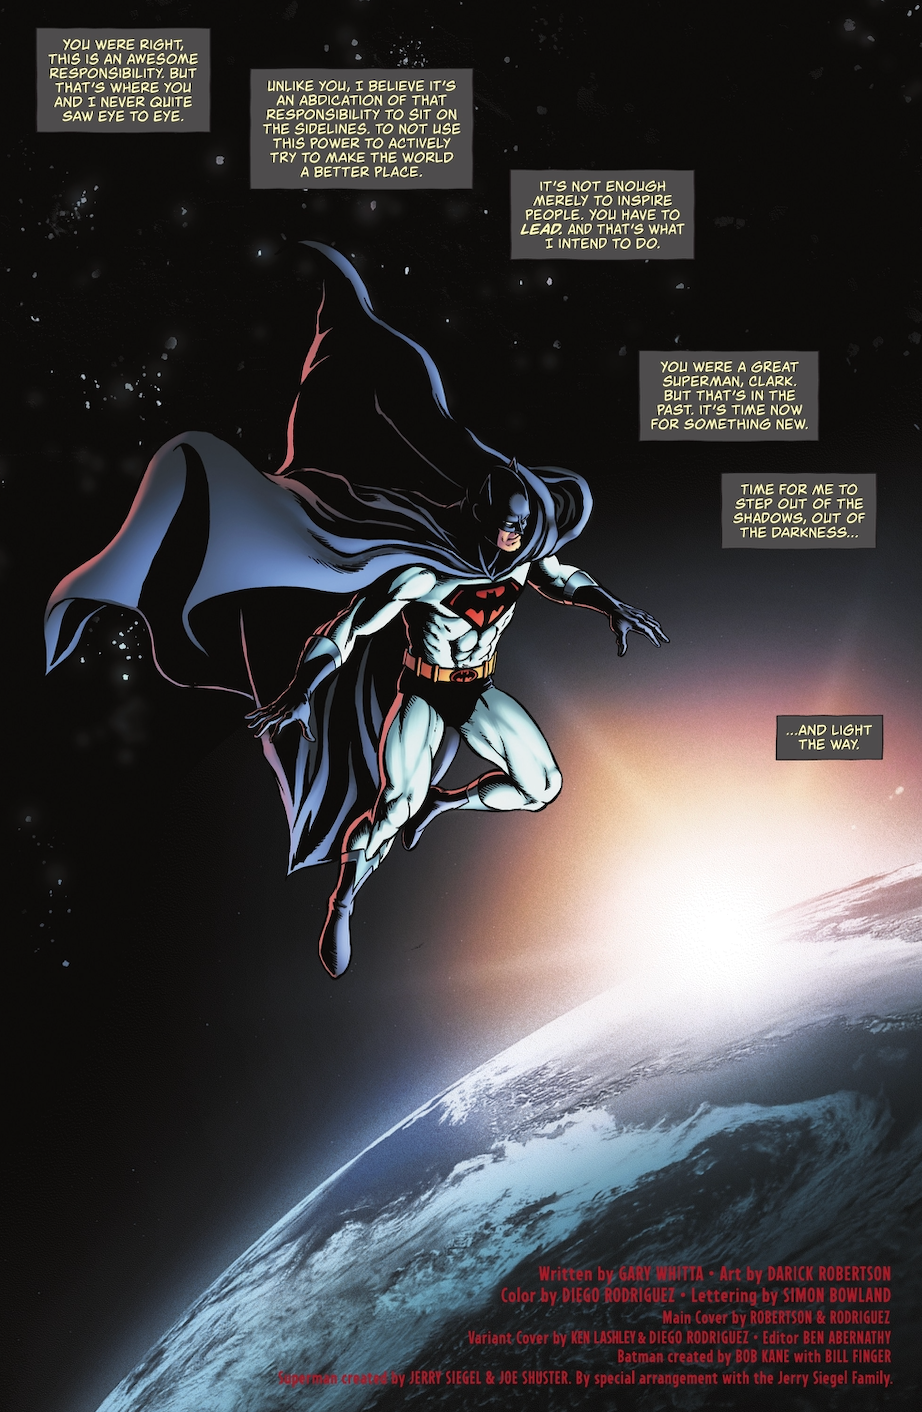 DC Just Gave Batman Superman's Powers